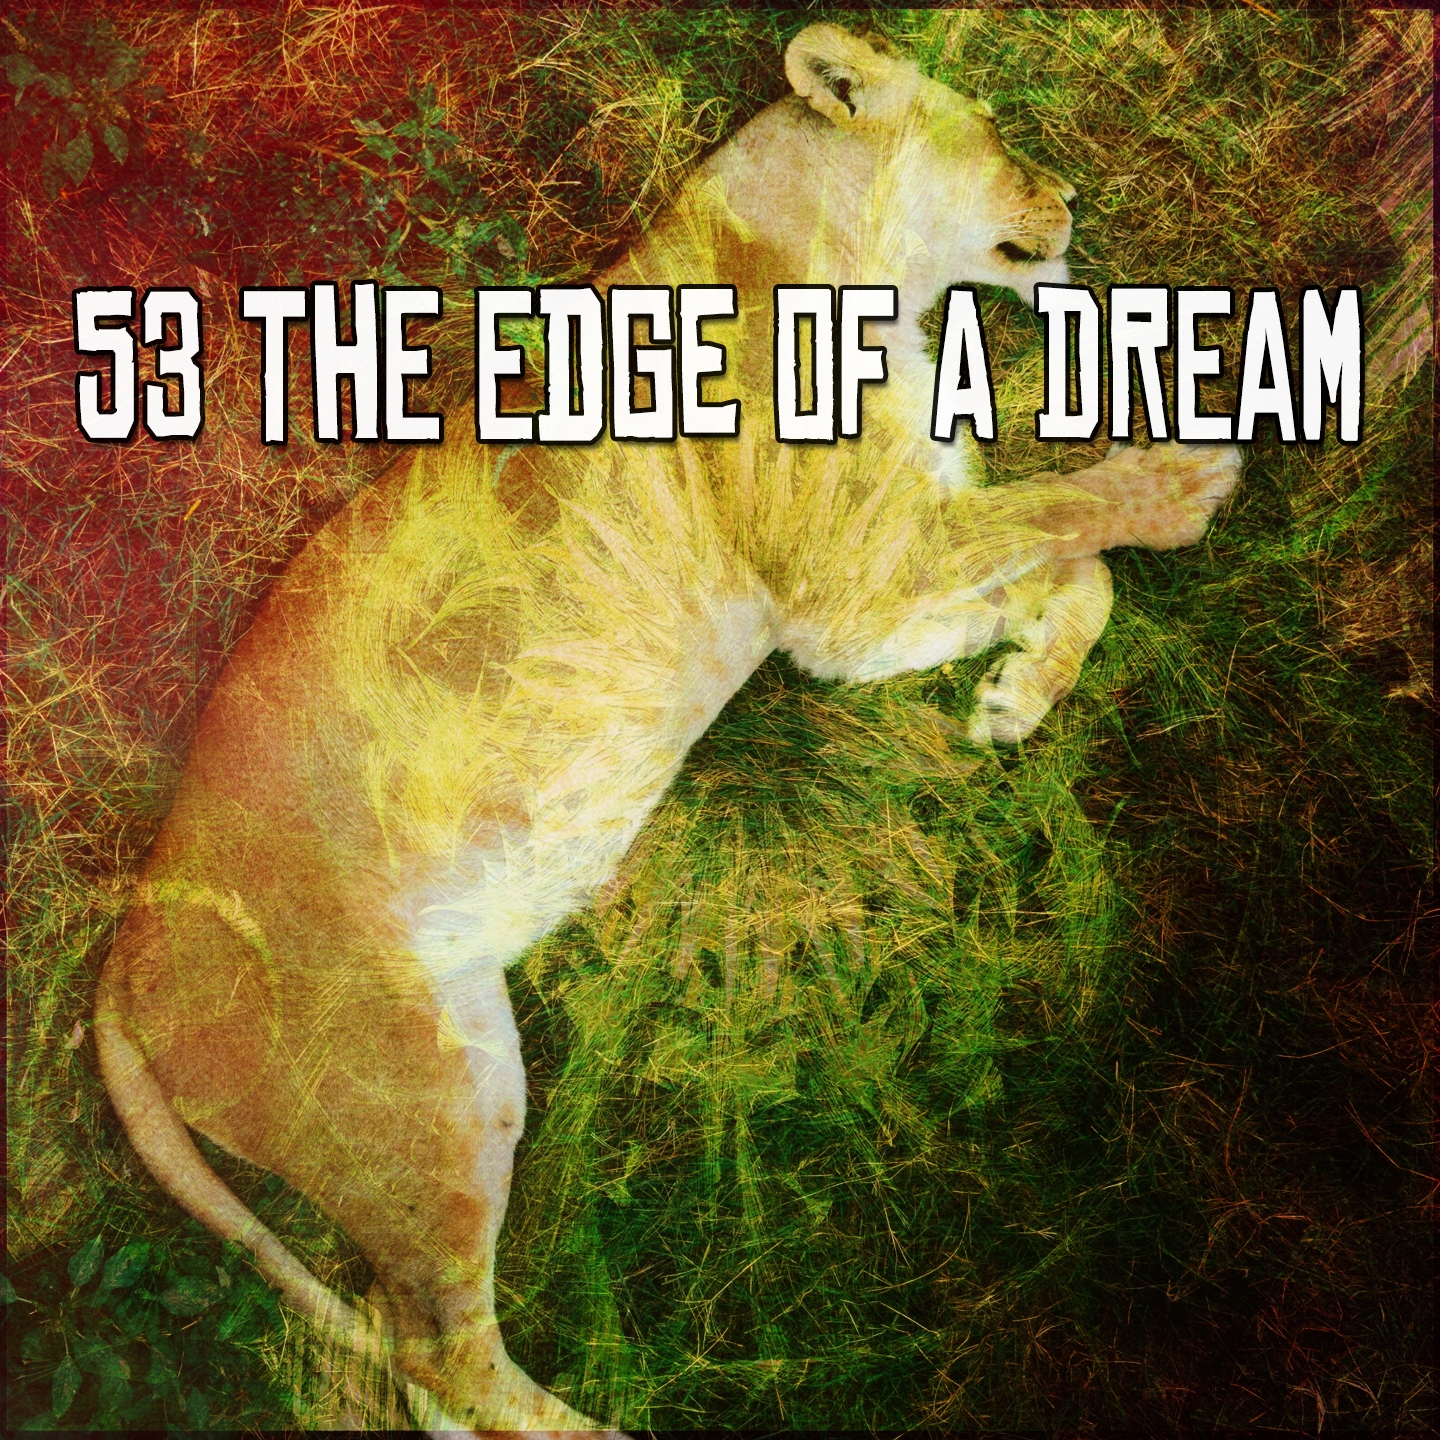 53 The Edge Of A Dream